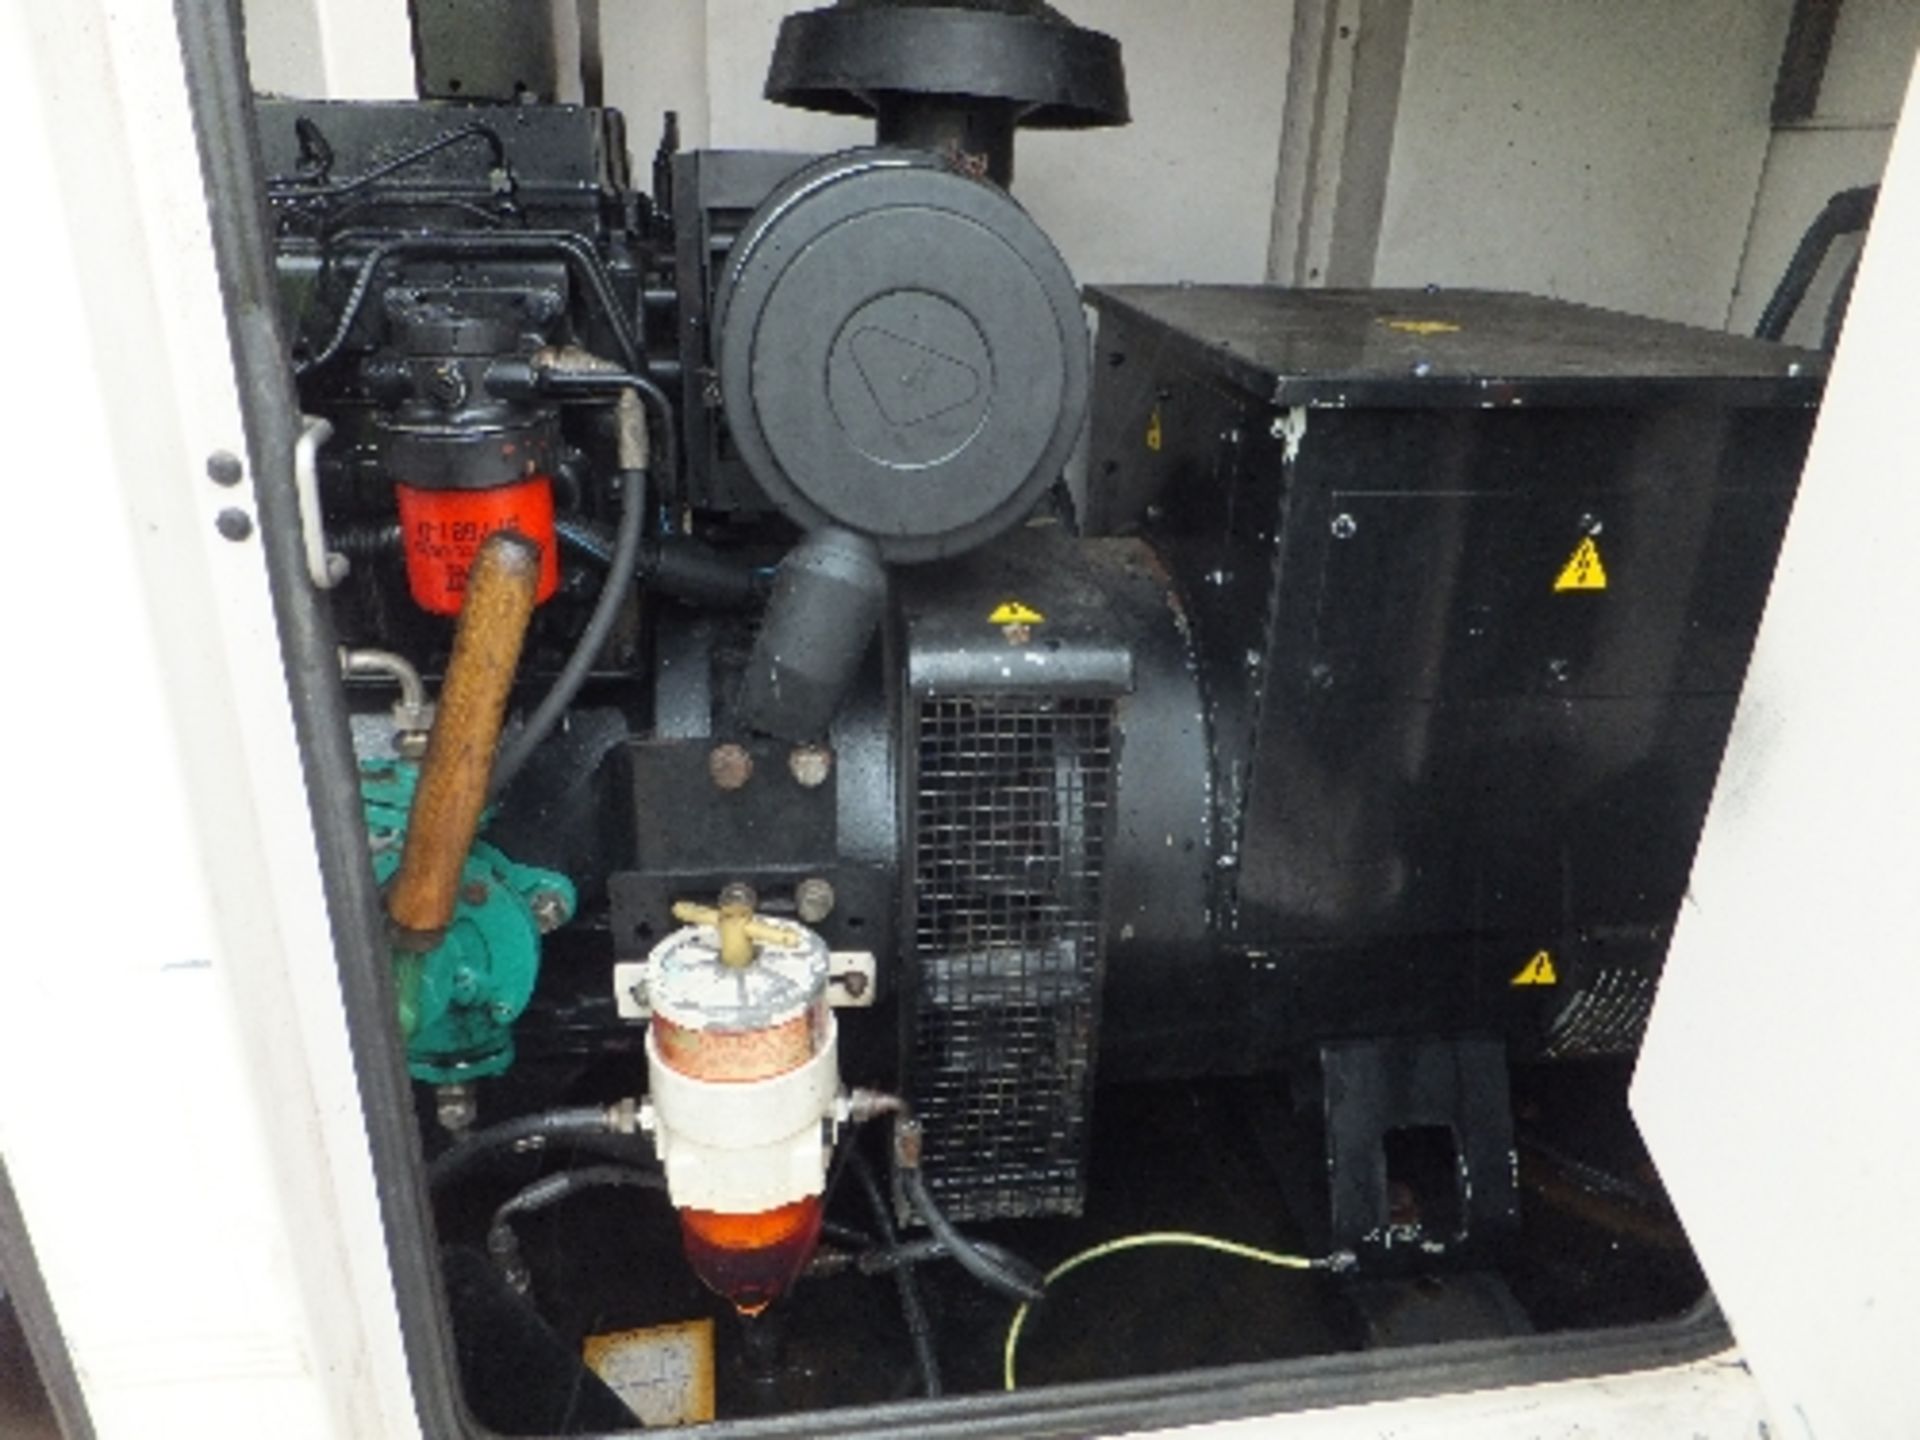 Wilson Perkins 100kva generator, 8754 hrs, emergency stop missing - Image 4 of 5